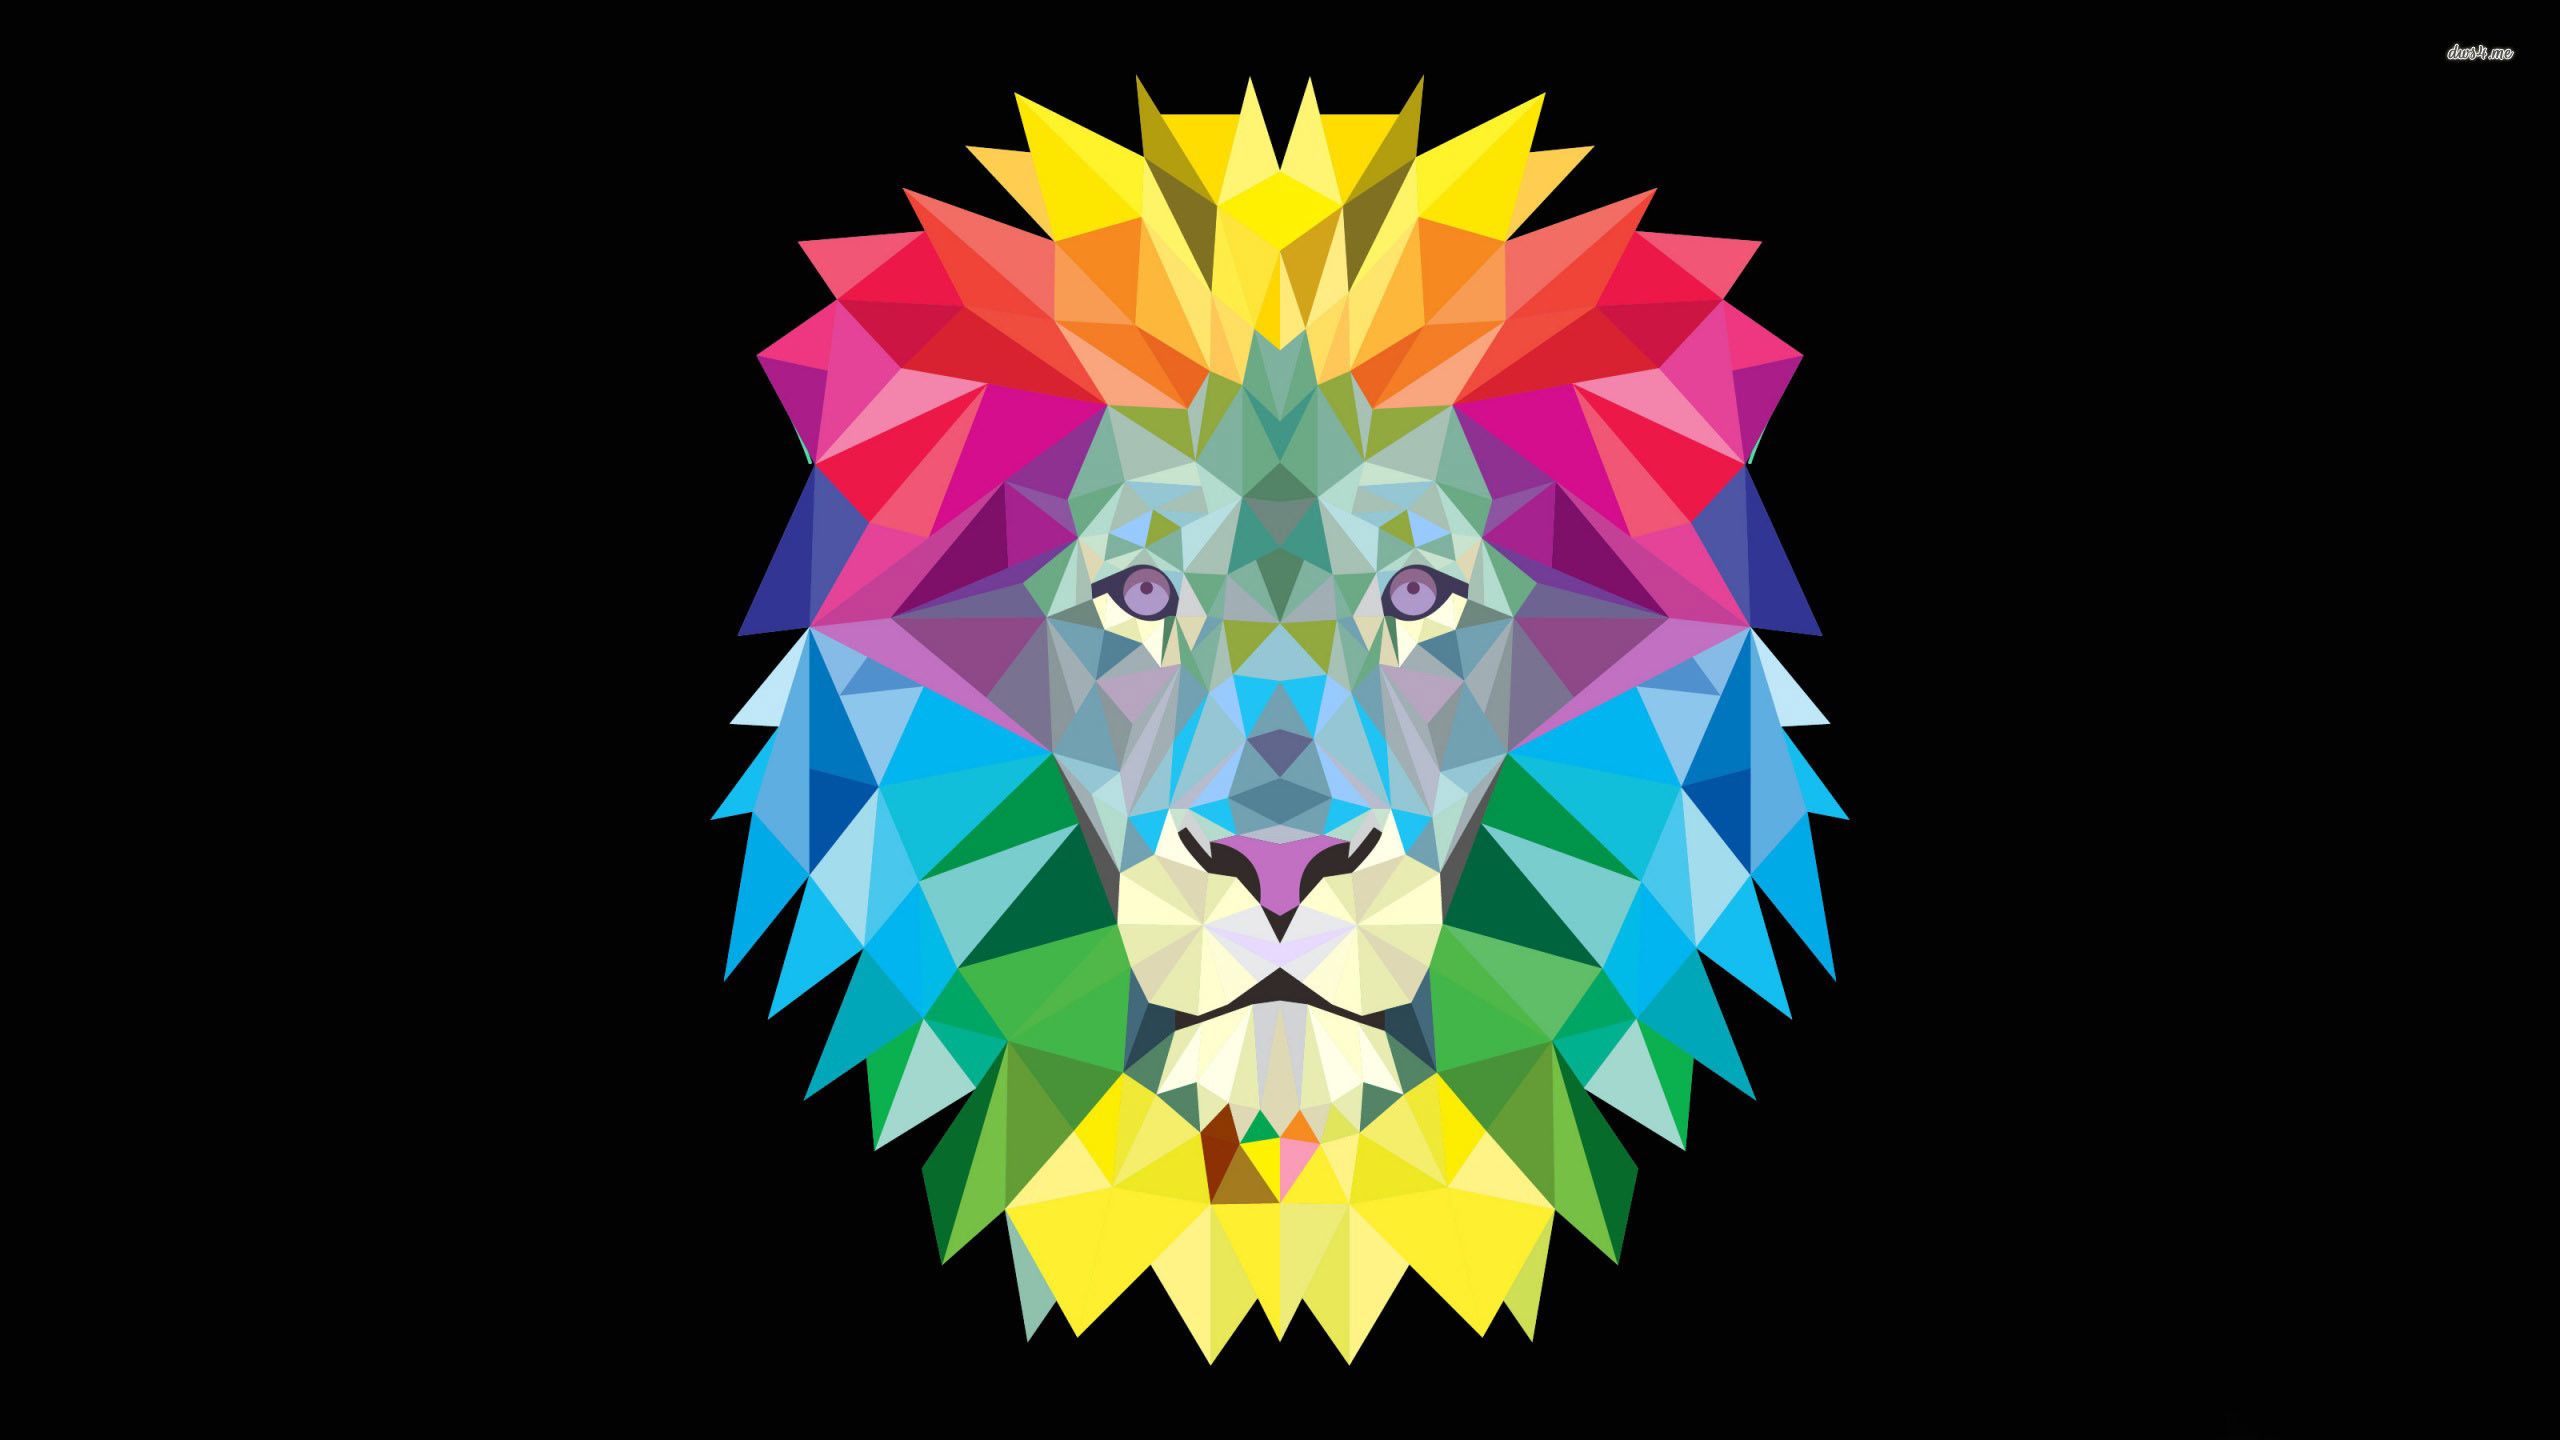 Colorful Lion Wallpaper Free .wallpaperaccess.com